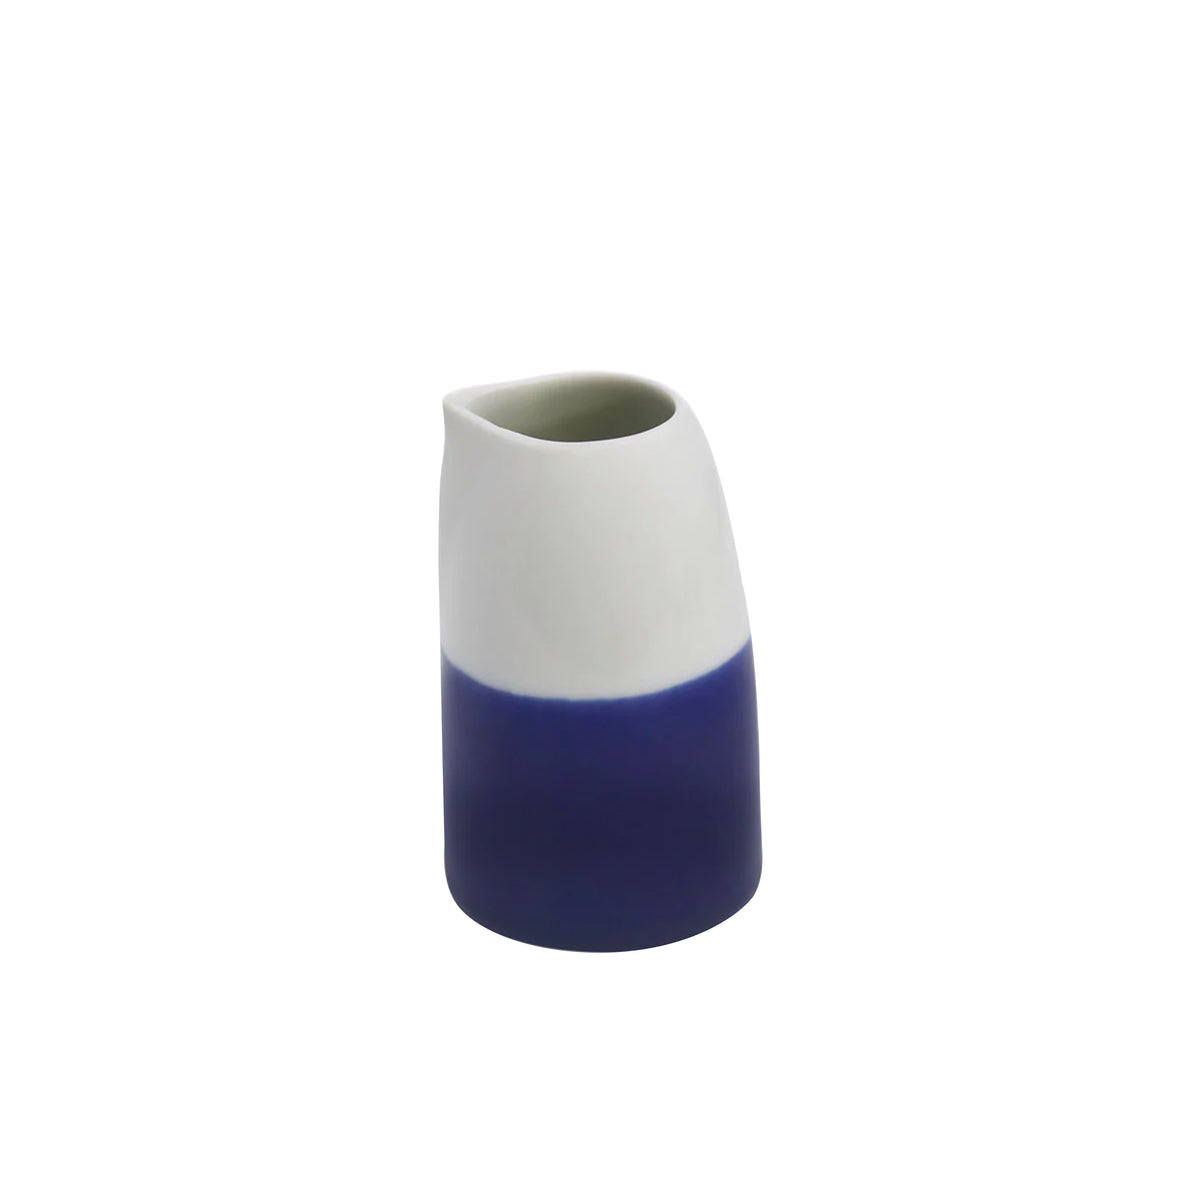 BLUE MYKONOS - Sake jug, small